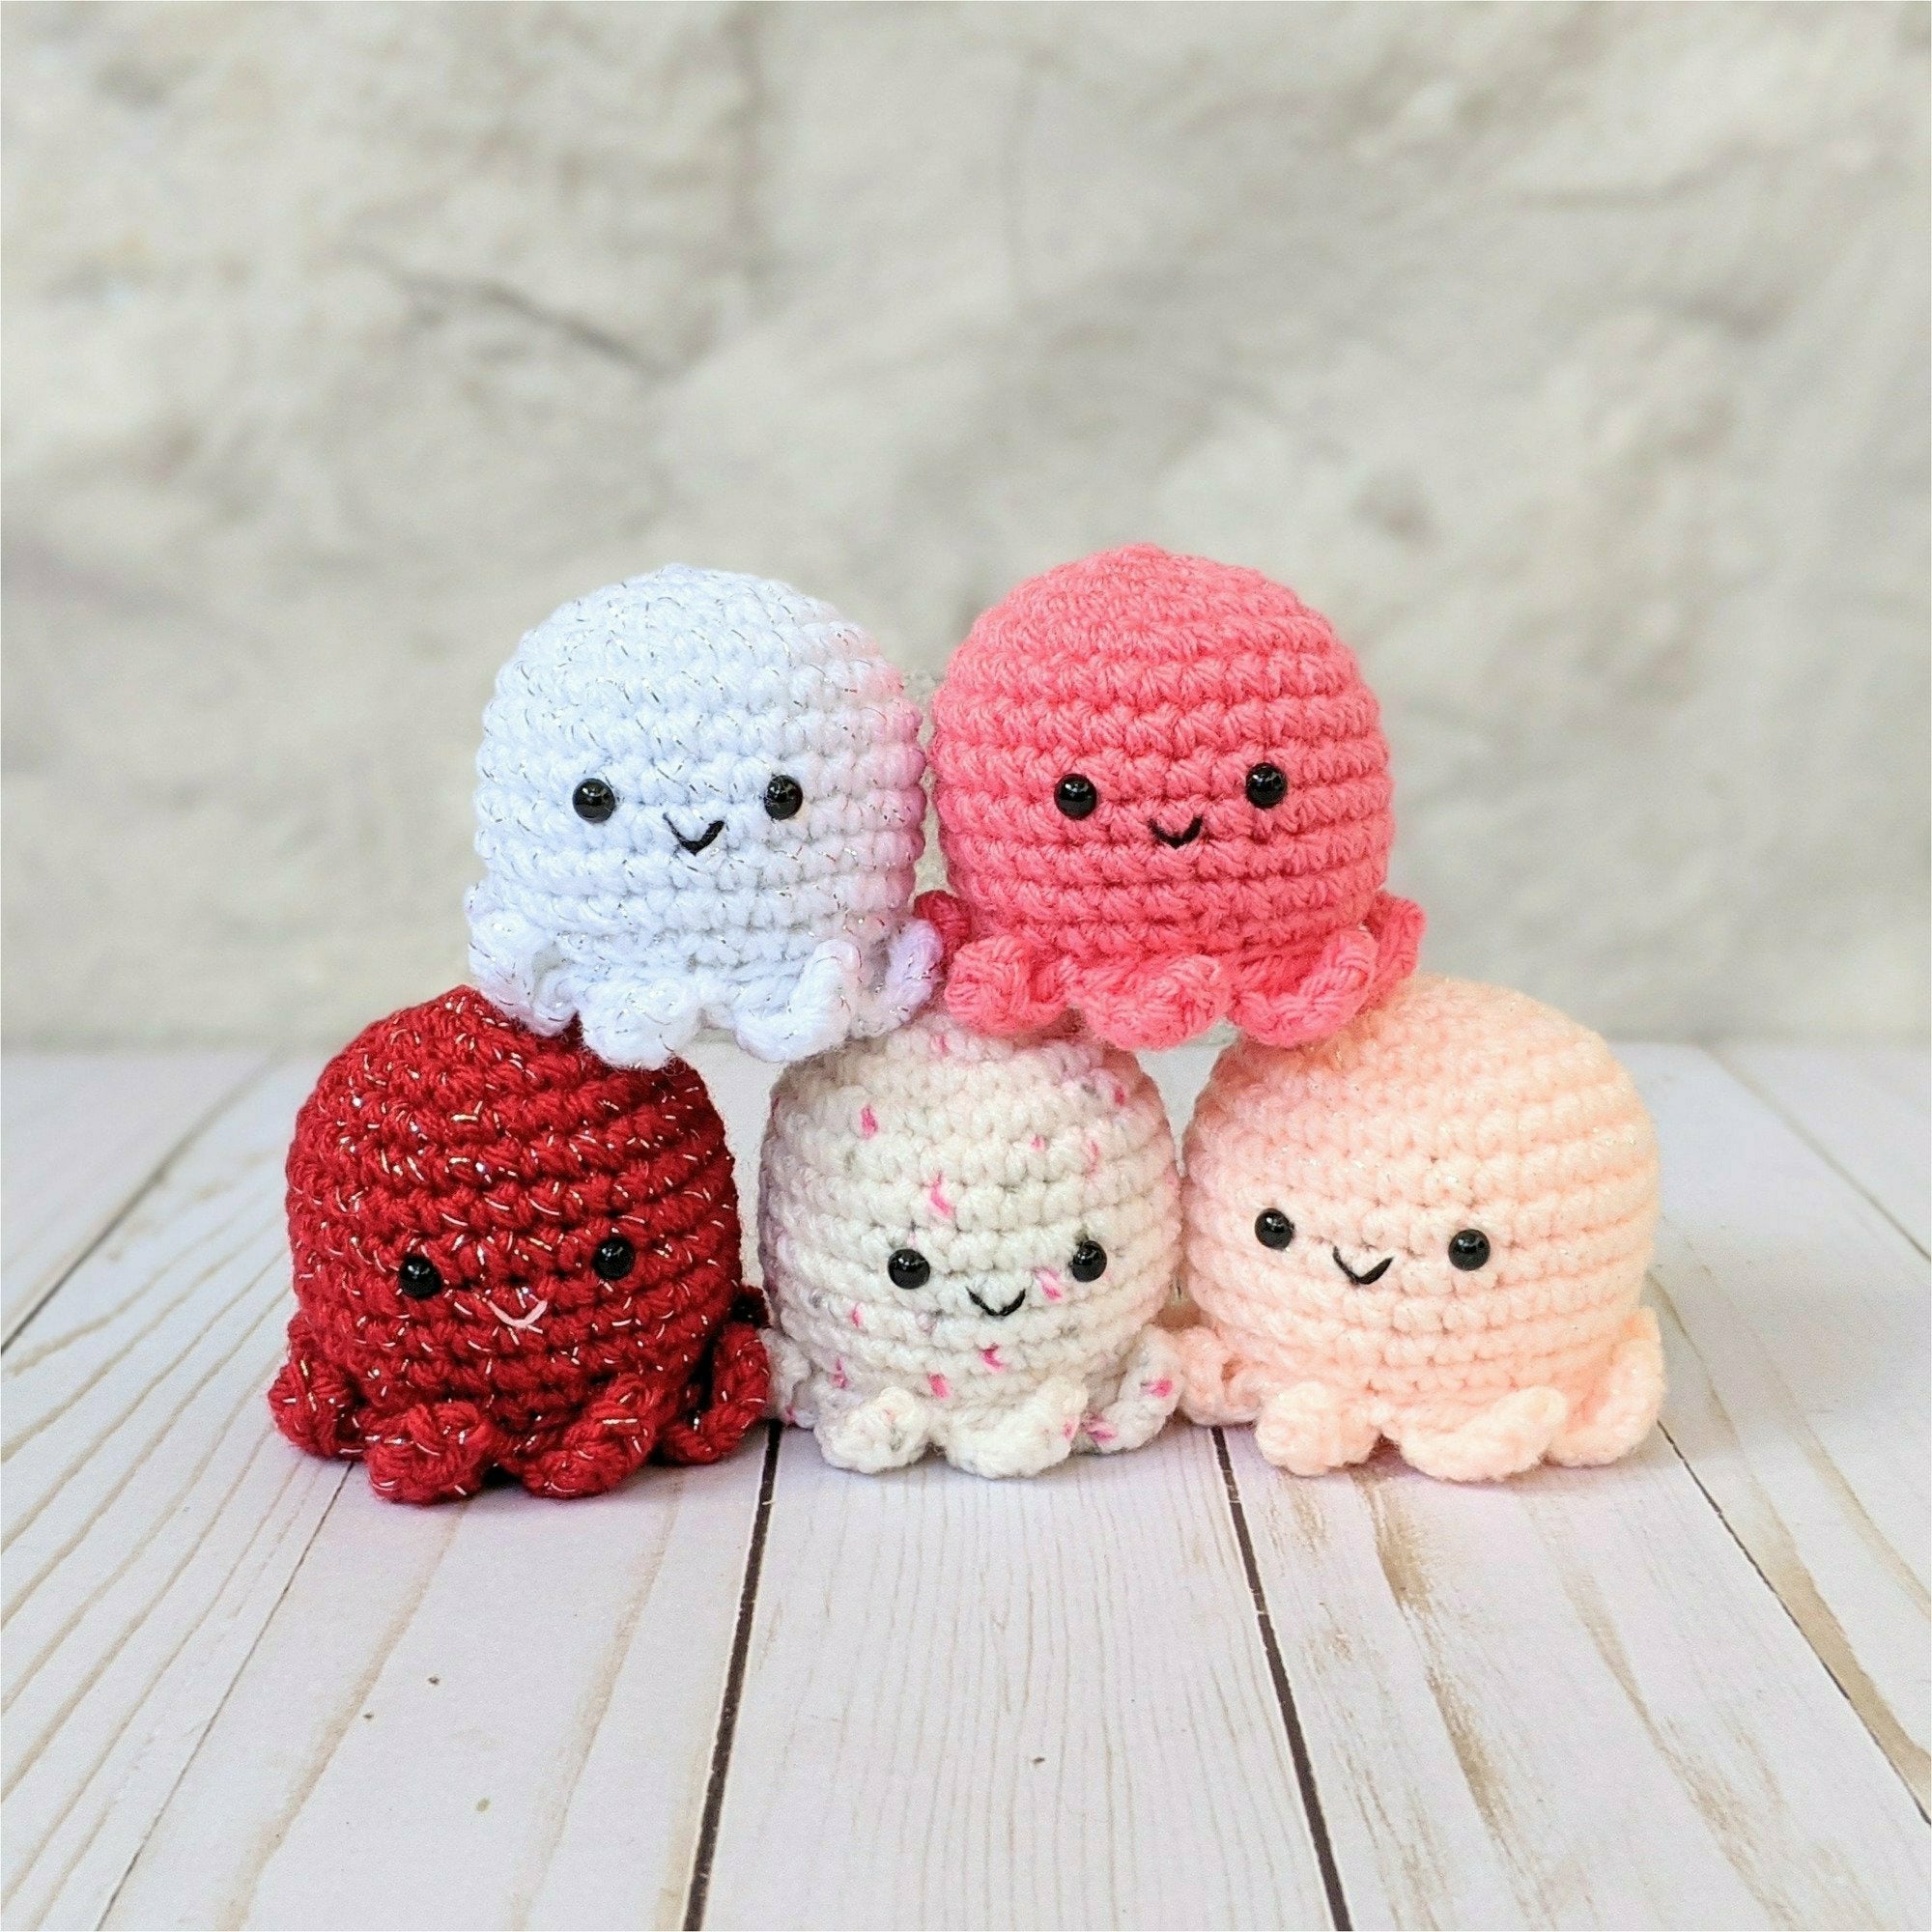 crochet-pattern-baby-octopus-stuffed-amigurumi-plush-toy-babyca